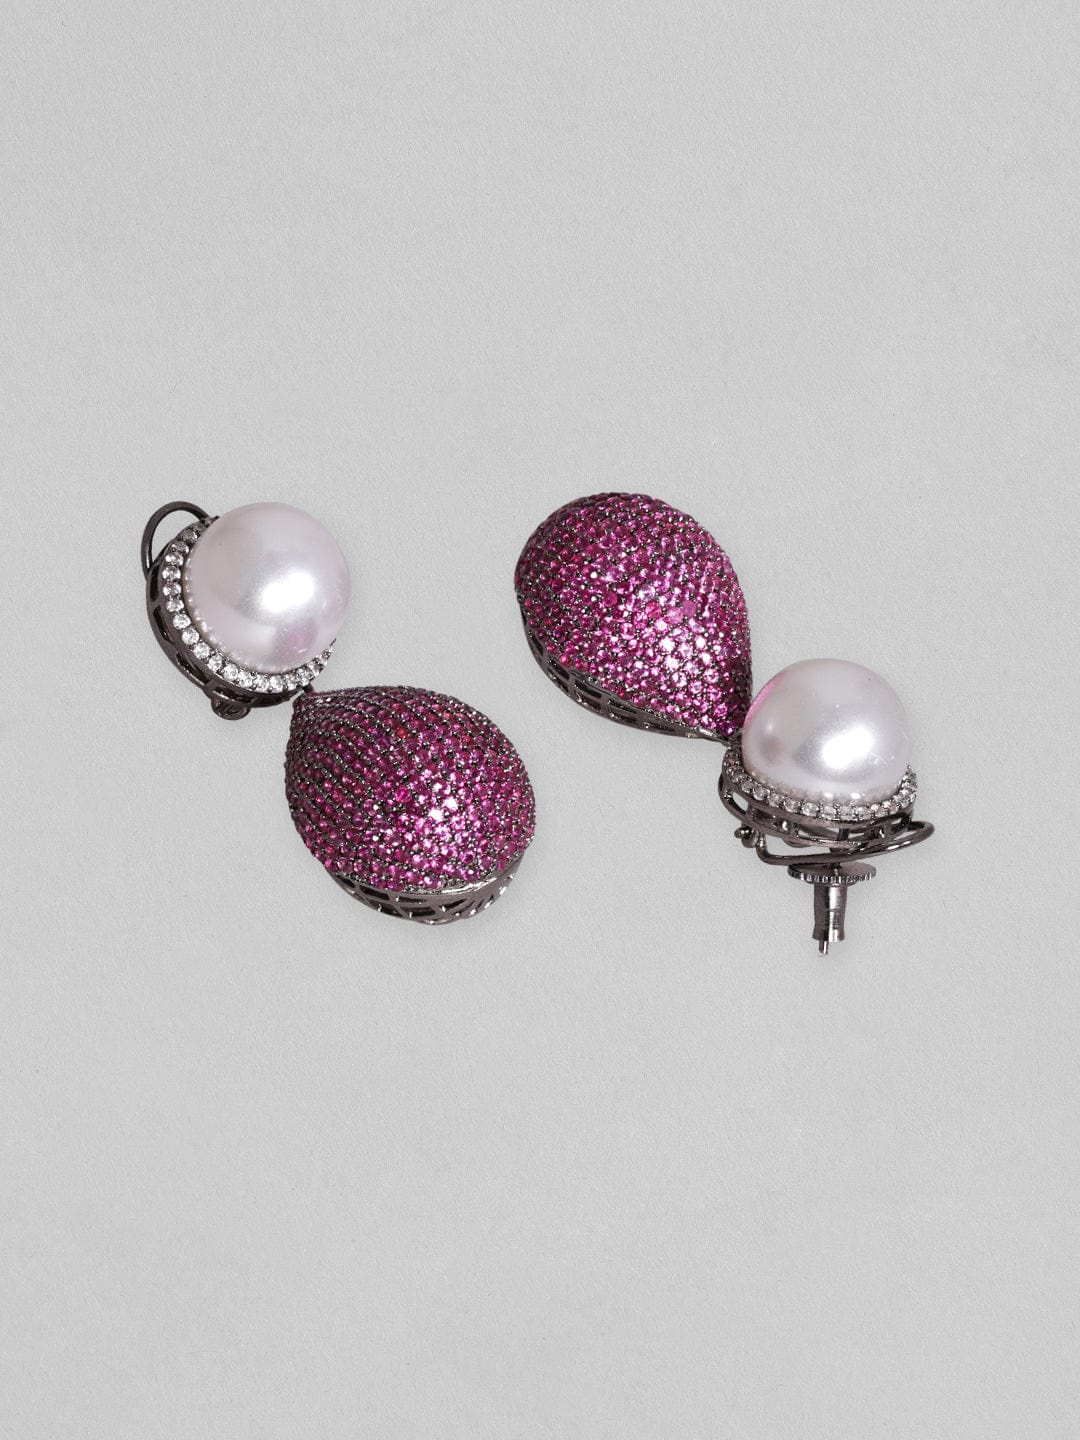 Pearl & Amethyst Earrings in 14k White Gold | QP Jewellers